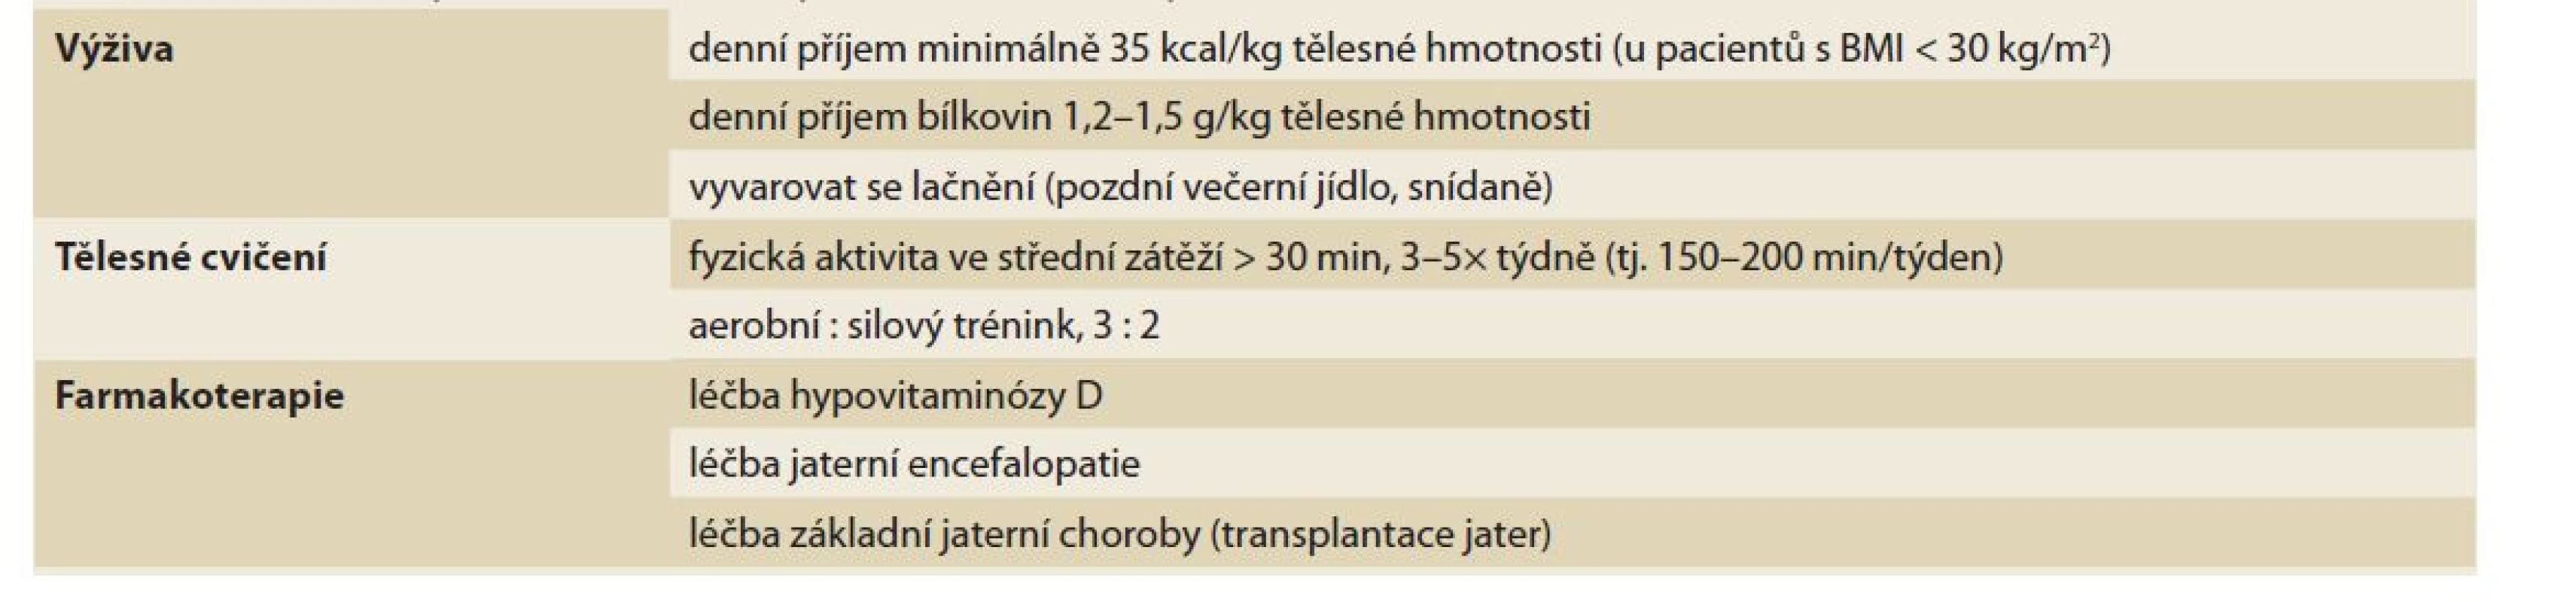 Možnosti léčby cirhotiků se sarkopenií.<br>
Tab. 3. Treatment options for cirrhotic patients with sarcopenia.